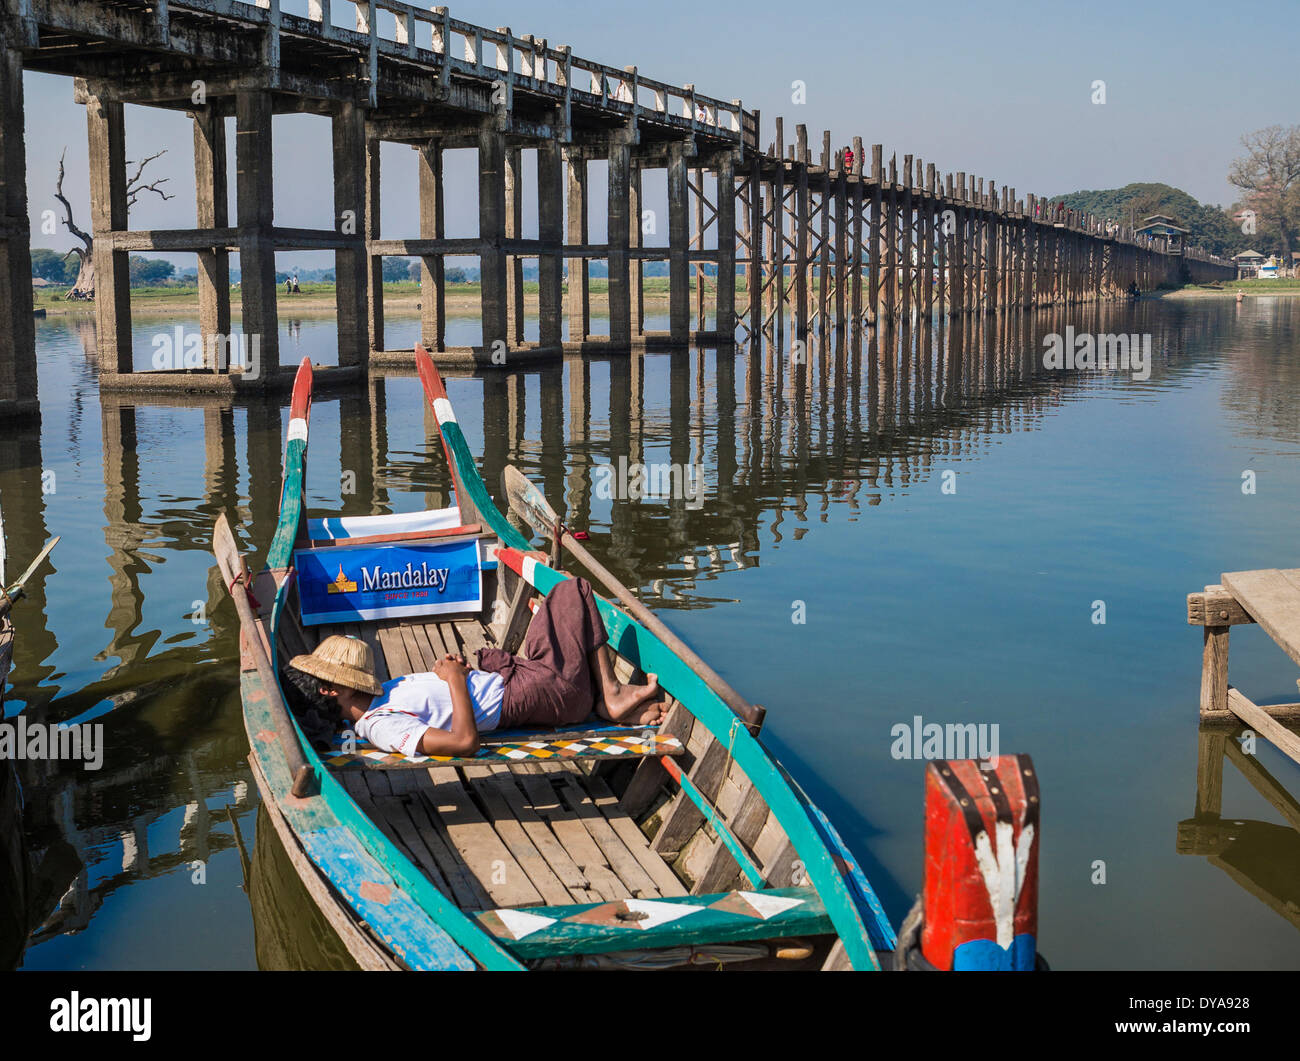 Amarapura Mandalay Myanmar Burma Asien Thaungthaman Boot Brücke See längste Reflexion Fluss Siesta Skyline schlafen Teka, Stockfoto